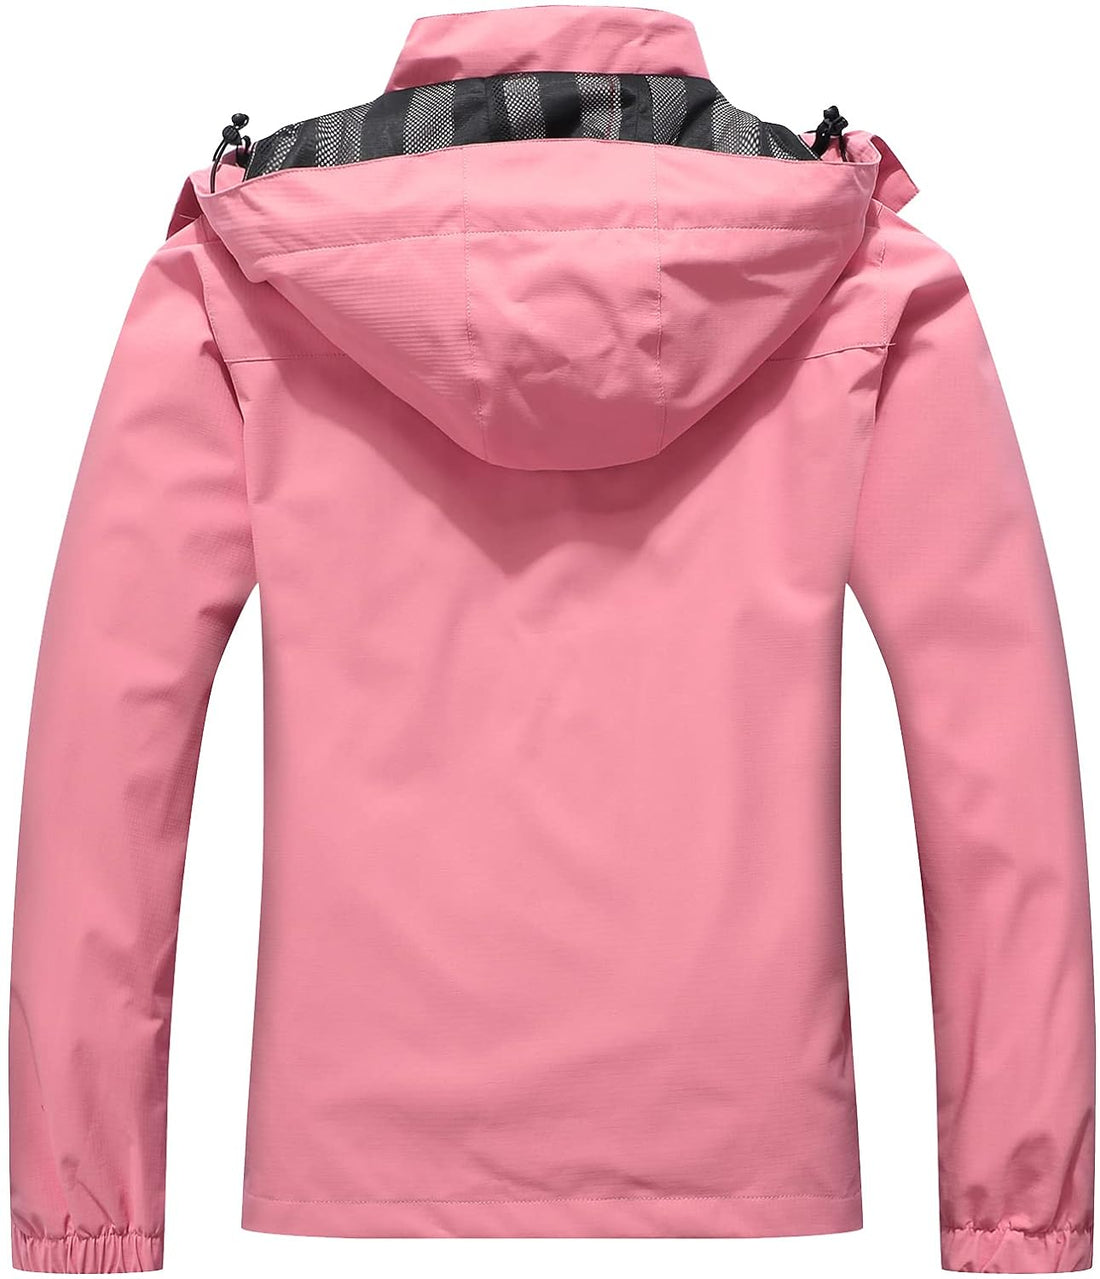 MOERDENG Women's Waterproof Rain Jacket Outdoor Lightweight Hooded Raincoat for Hiking Travel, Pink-06, Medium